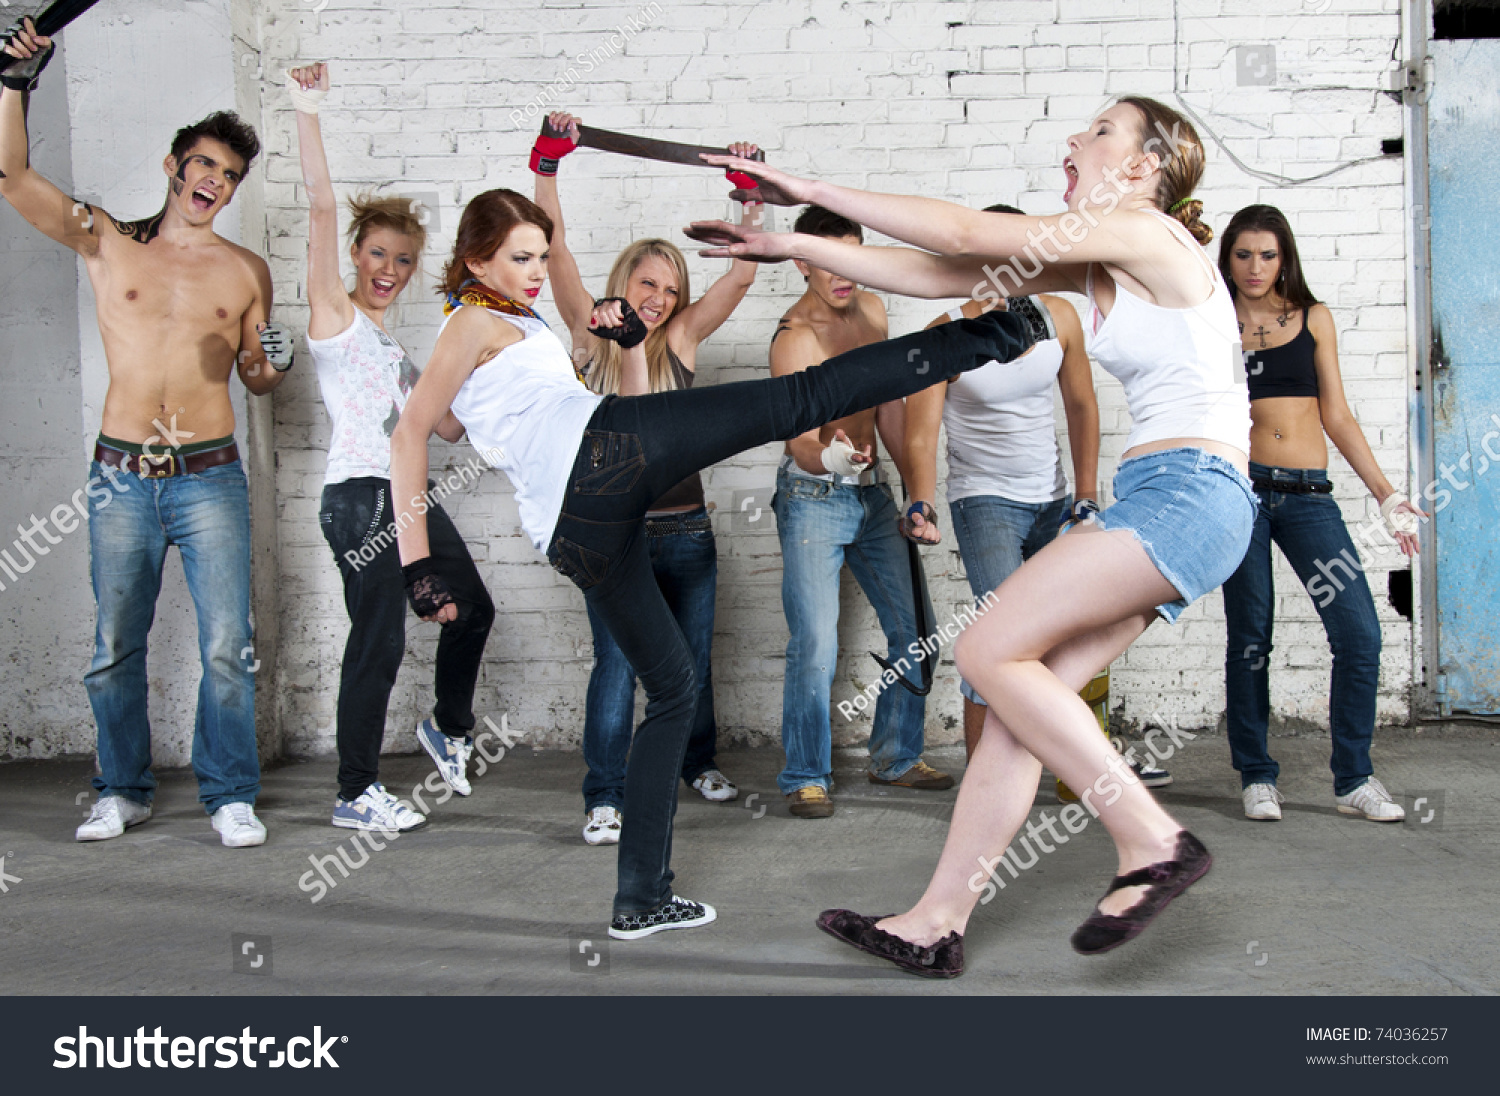 Girl fight www Paroles et